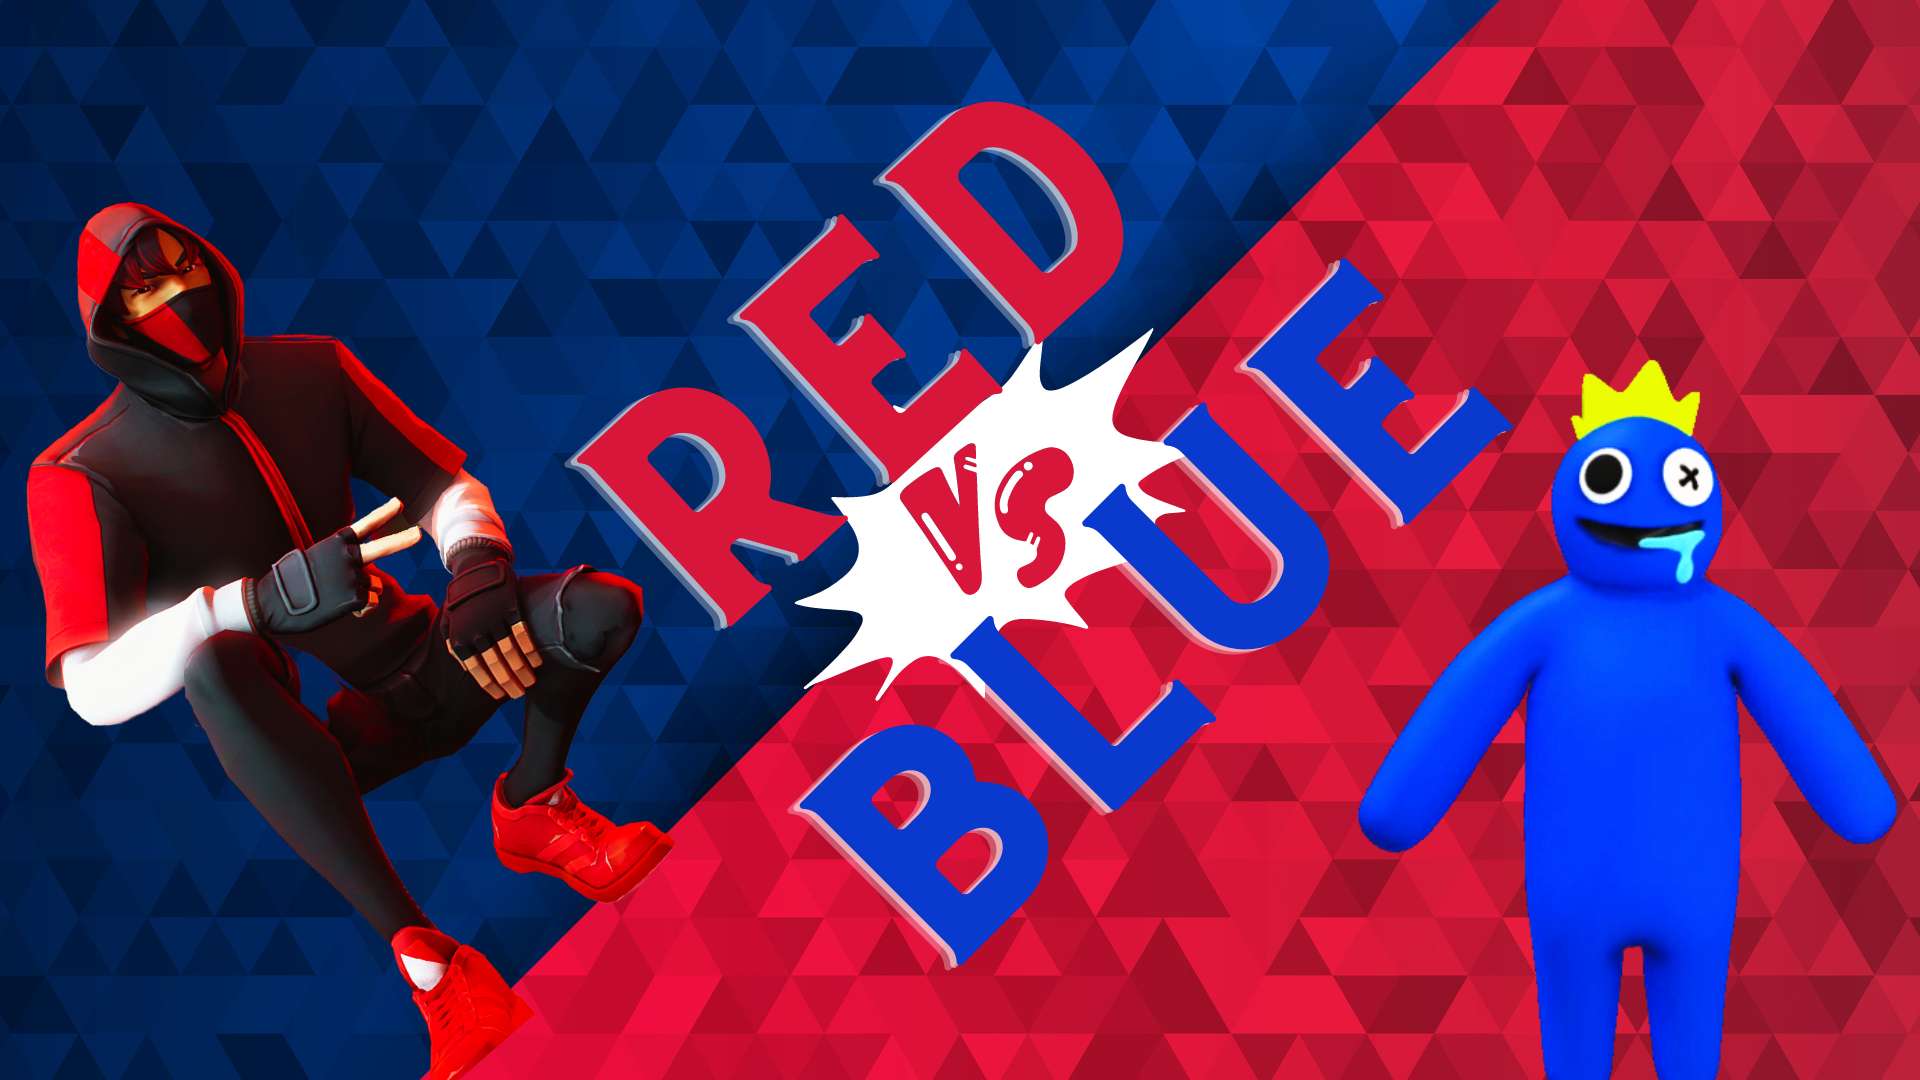 💥 SUPER DAMAGE RED VS BLUE 💥 9157-7881-3011 by winstonefn - Fortnite  Creative Map Code 